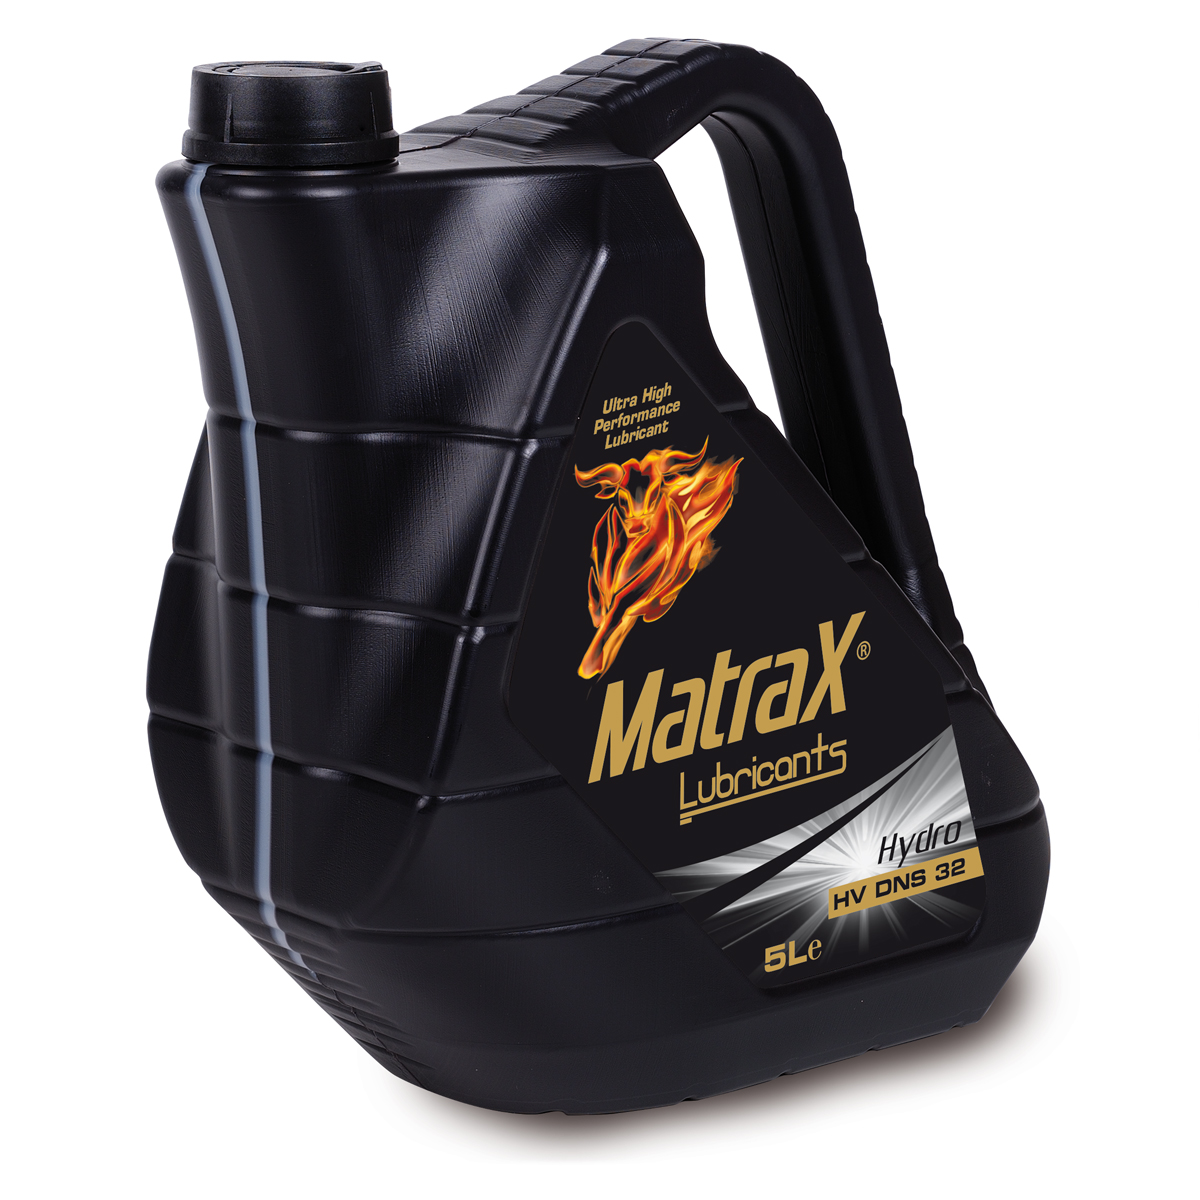 matrax-lubricants-hydro-hv-dns-32-5l